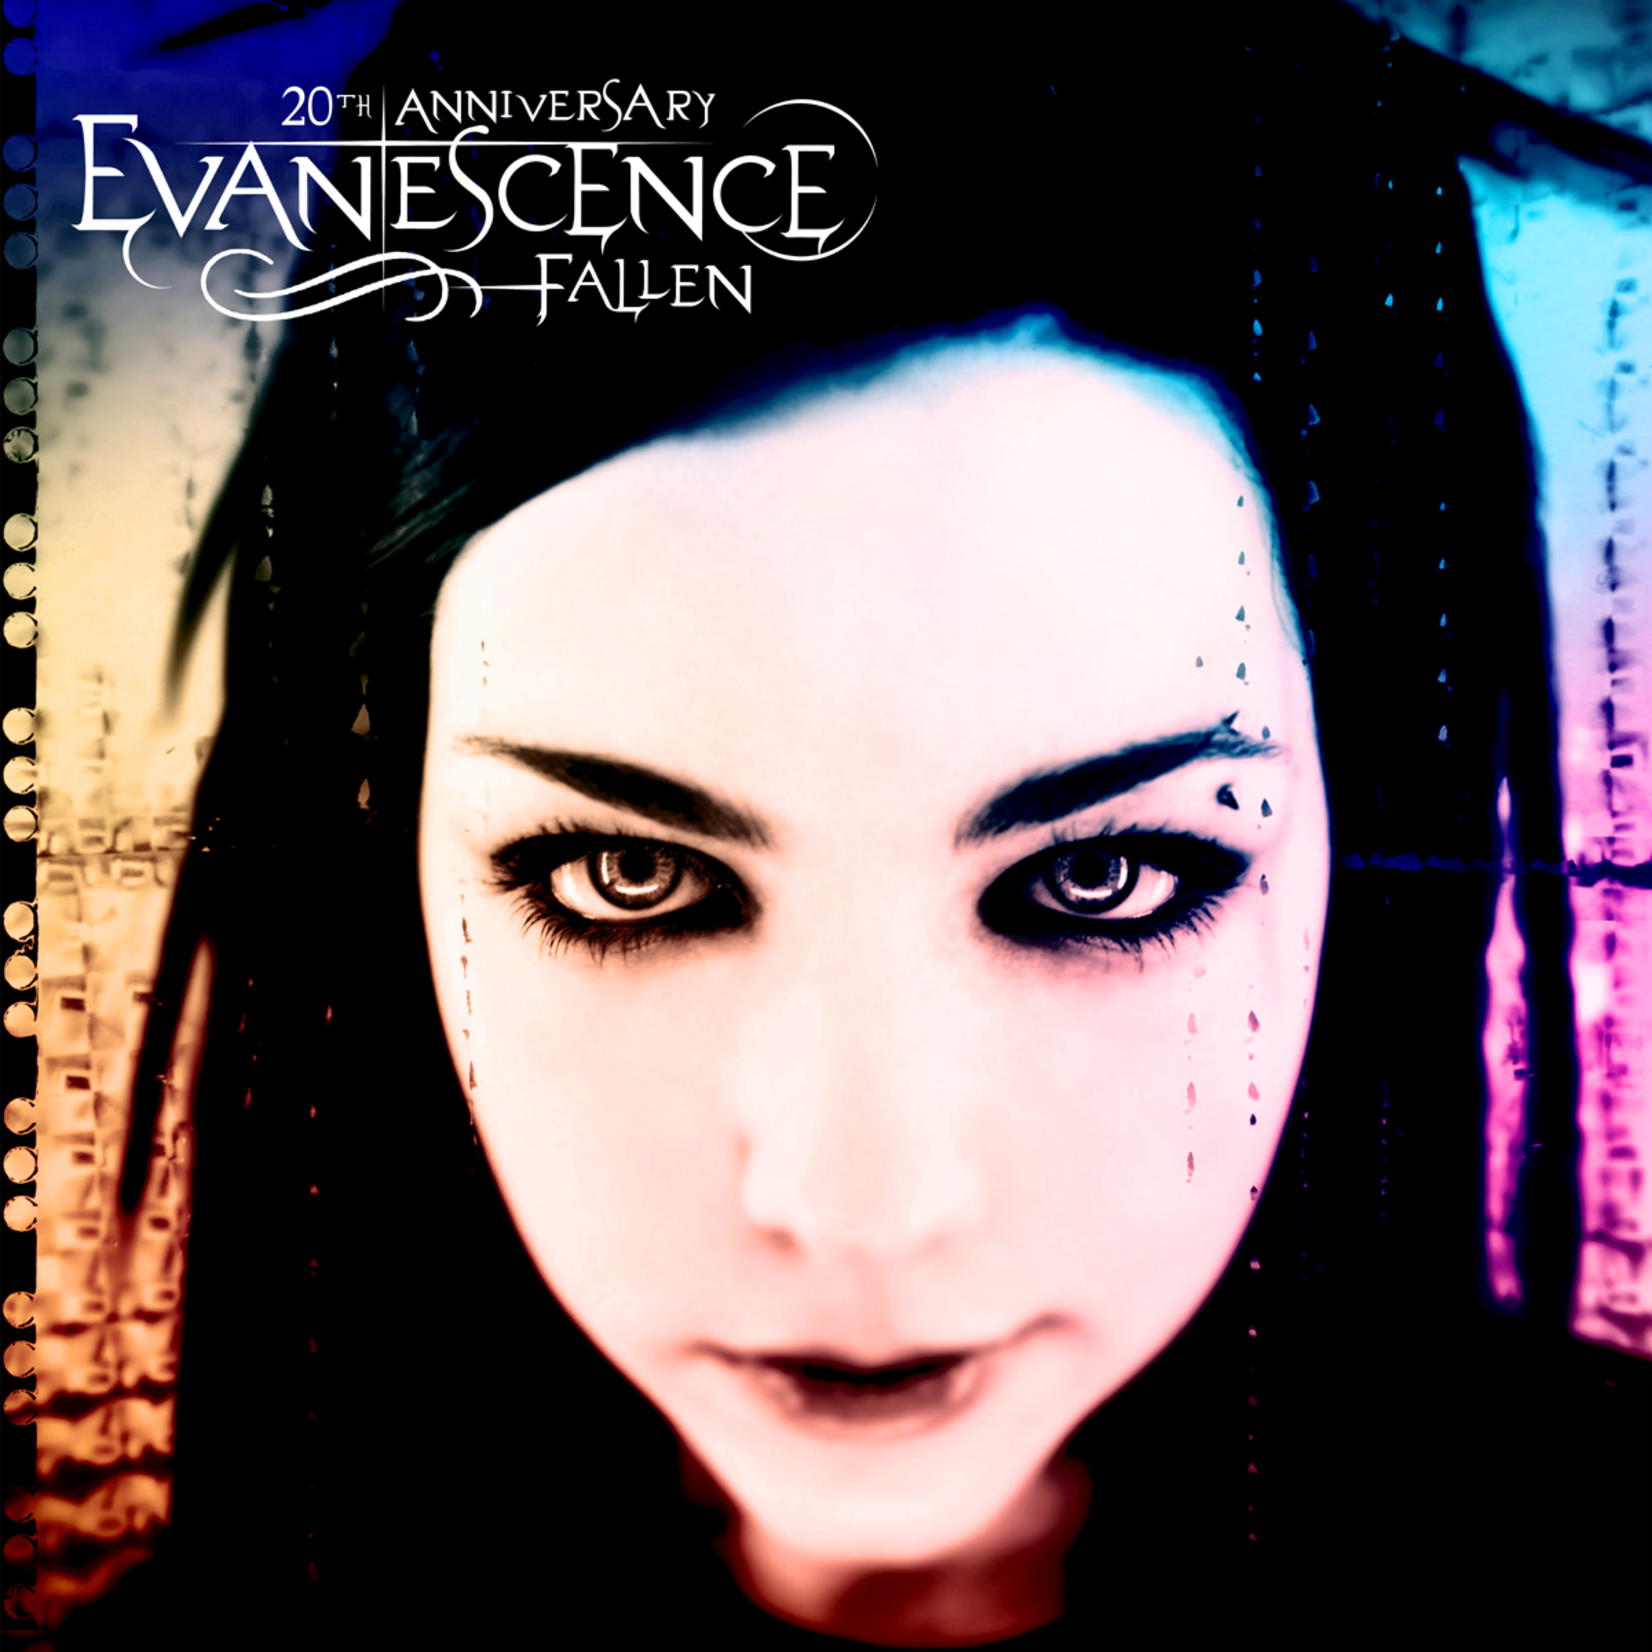 [New] Evanescence - Fallen (2LP, 20th Anniversary, deluxe edition)